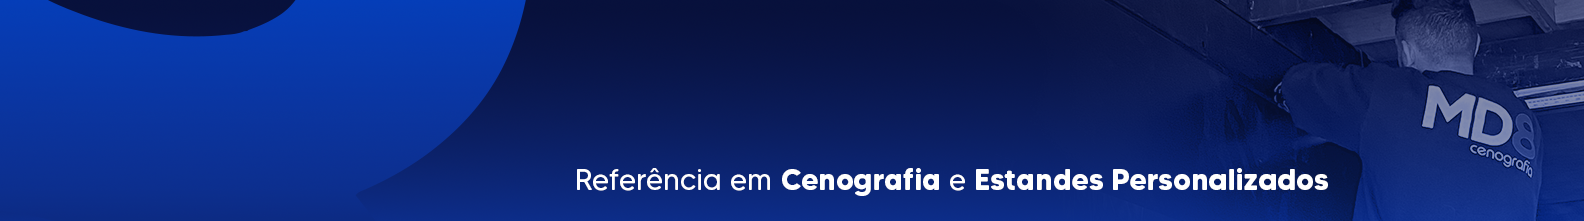 Bannière de profil de Guilherme Barão de Mello